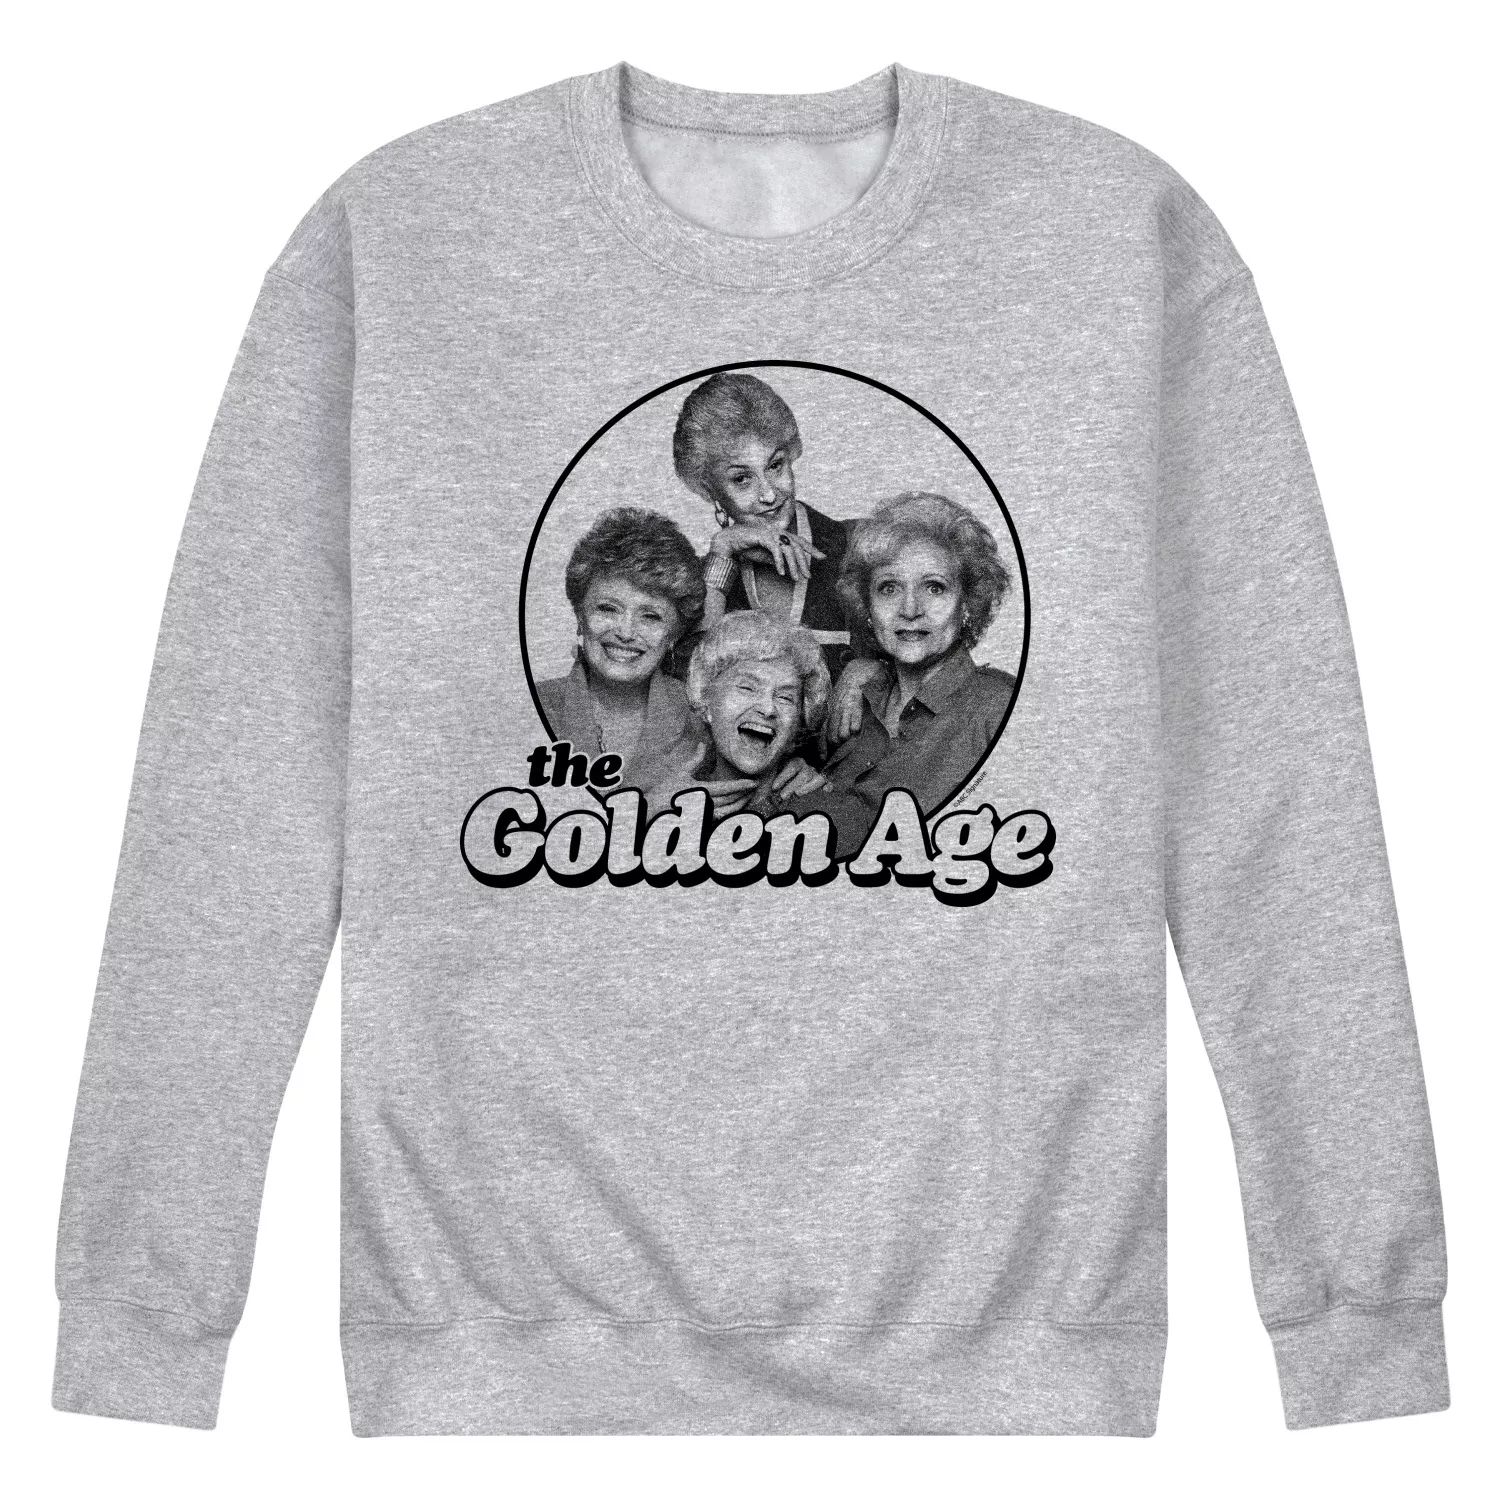 Мужской свитшот Golden Age The Golden Age для девочек Licensed Character golden age hotel